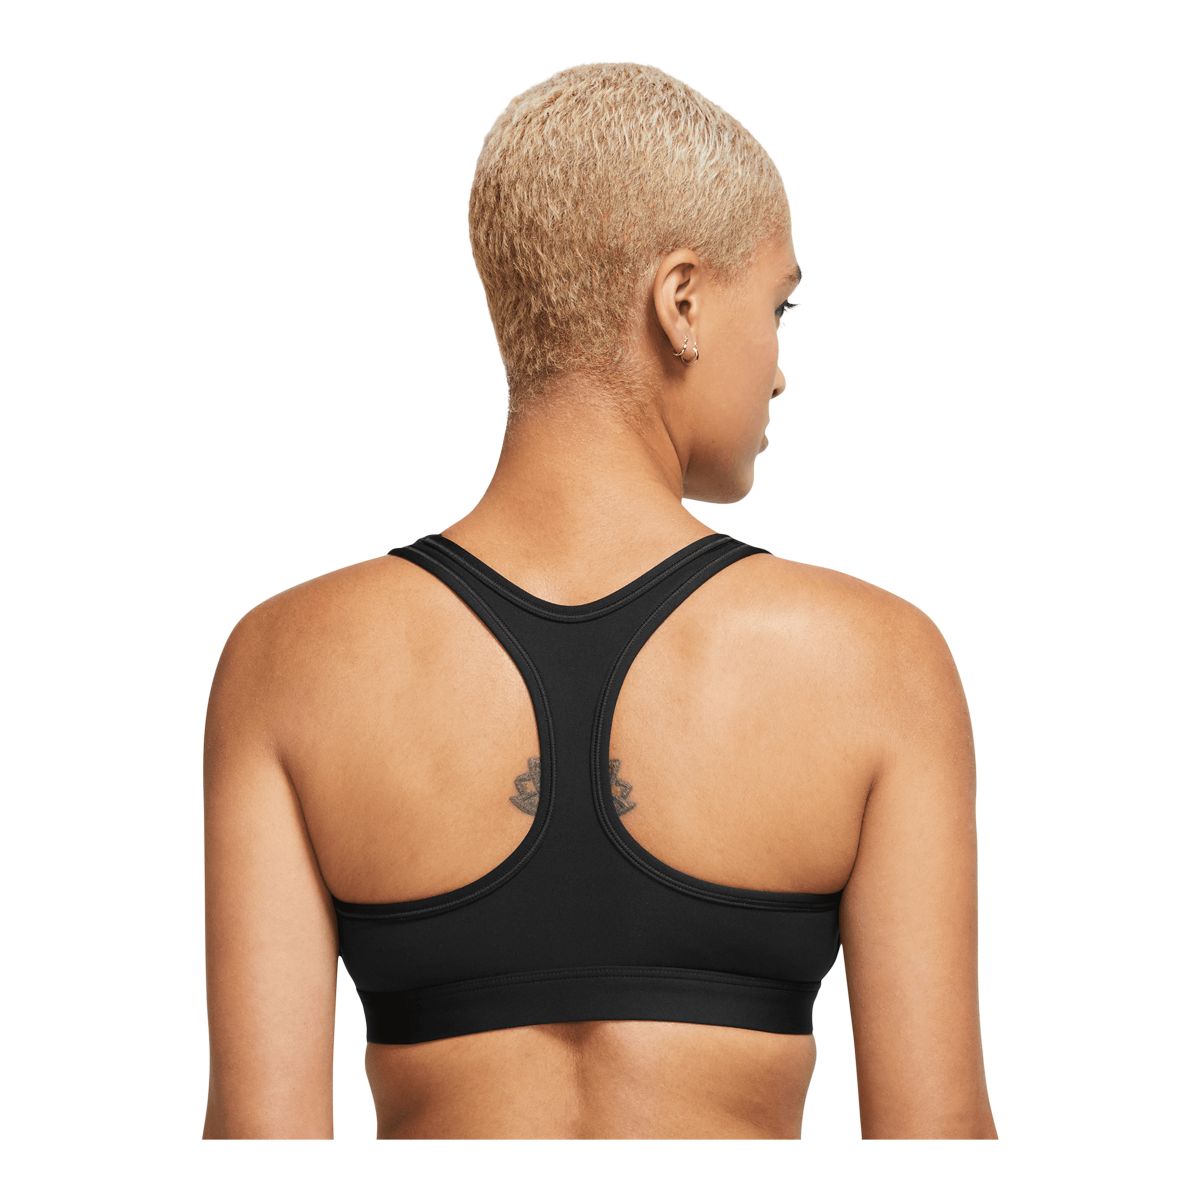 Nike Swoosh Light Support Women's Sports Bra Dx6817-555 @ Best Price Online